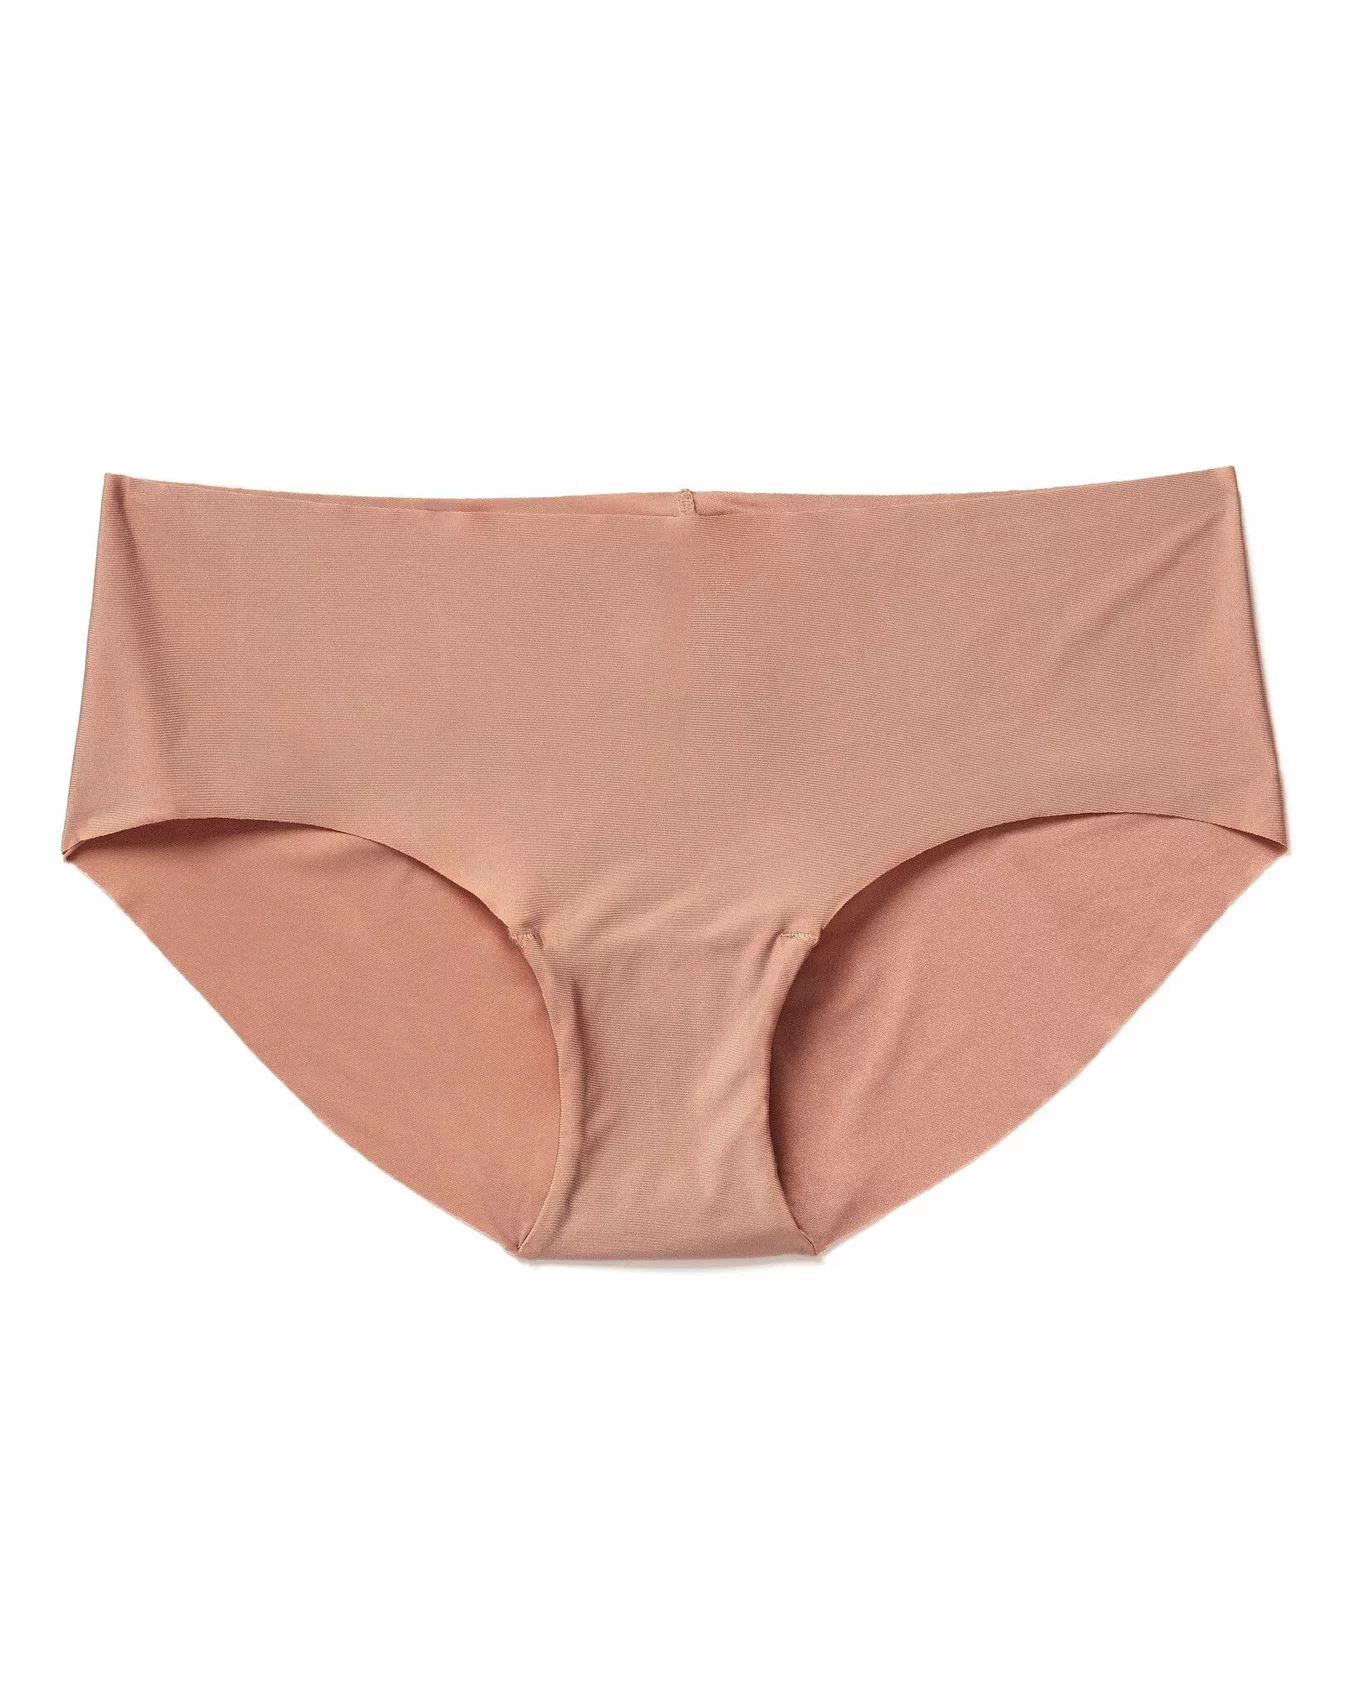 Lucky Brand Women's Underwear - 5 Pack Microfiber Hipster Briefs (S-XL)